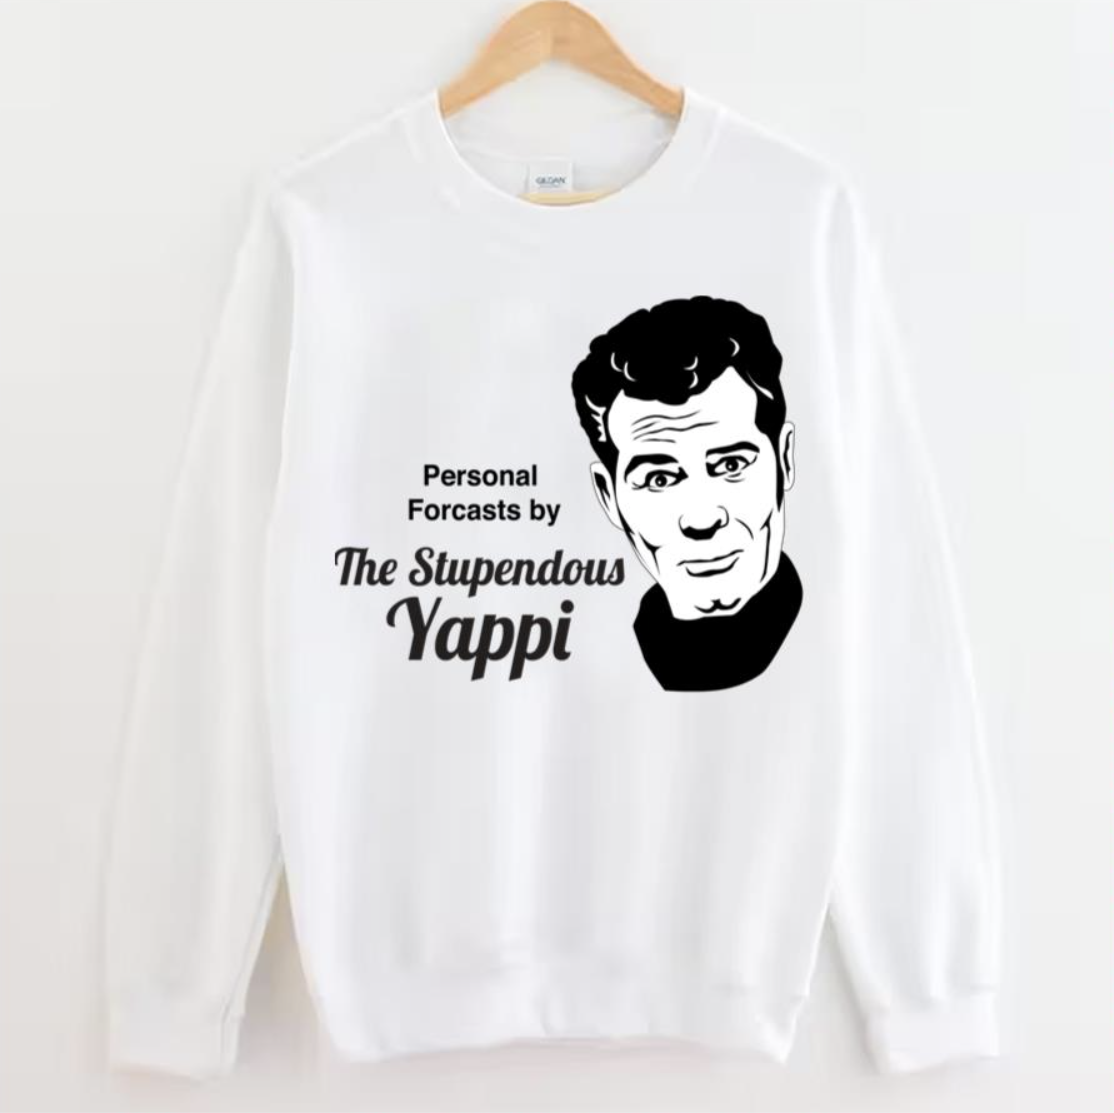 The Stupendous Yappi X Files Series shirt